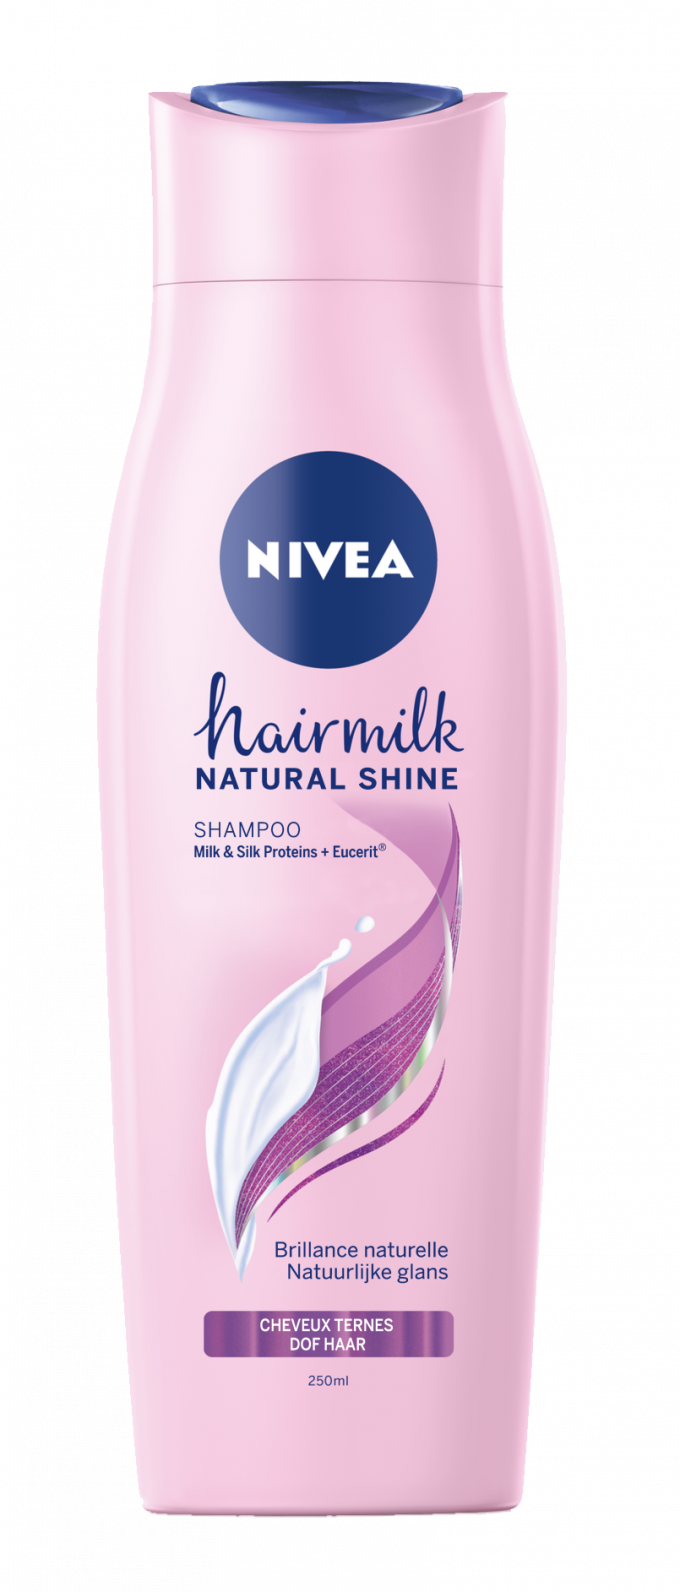 Nivea Hairmilk natural shine